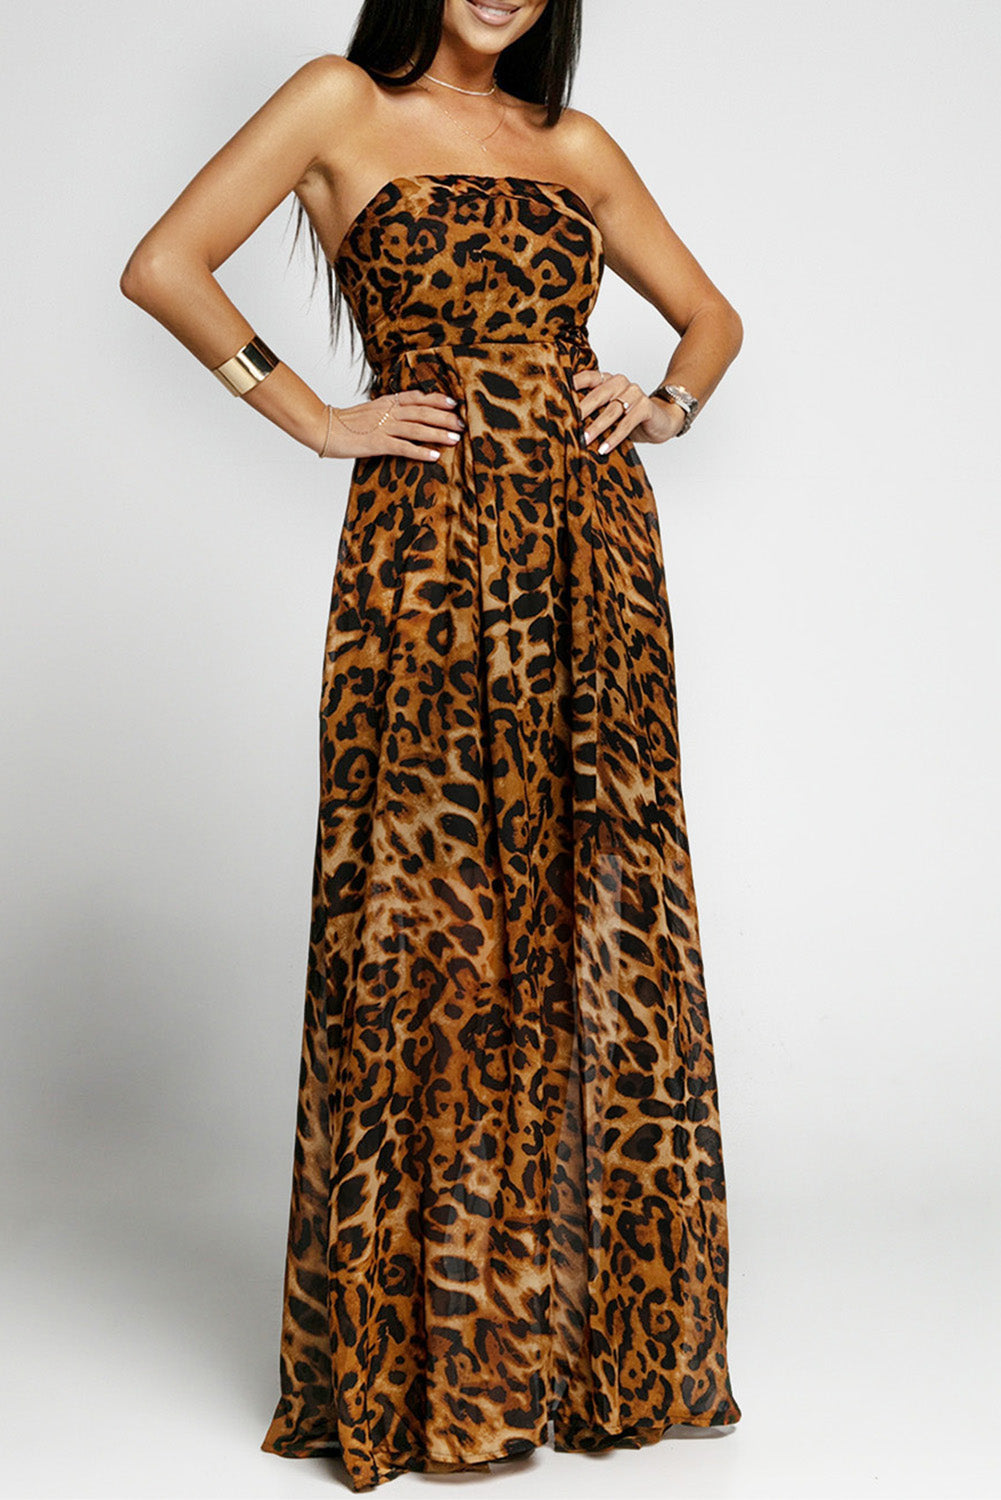 INC Inc CheetahPrint Maxi Dress Medium Browns - ドレス、ブライダル